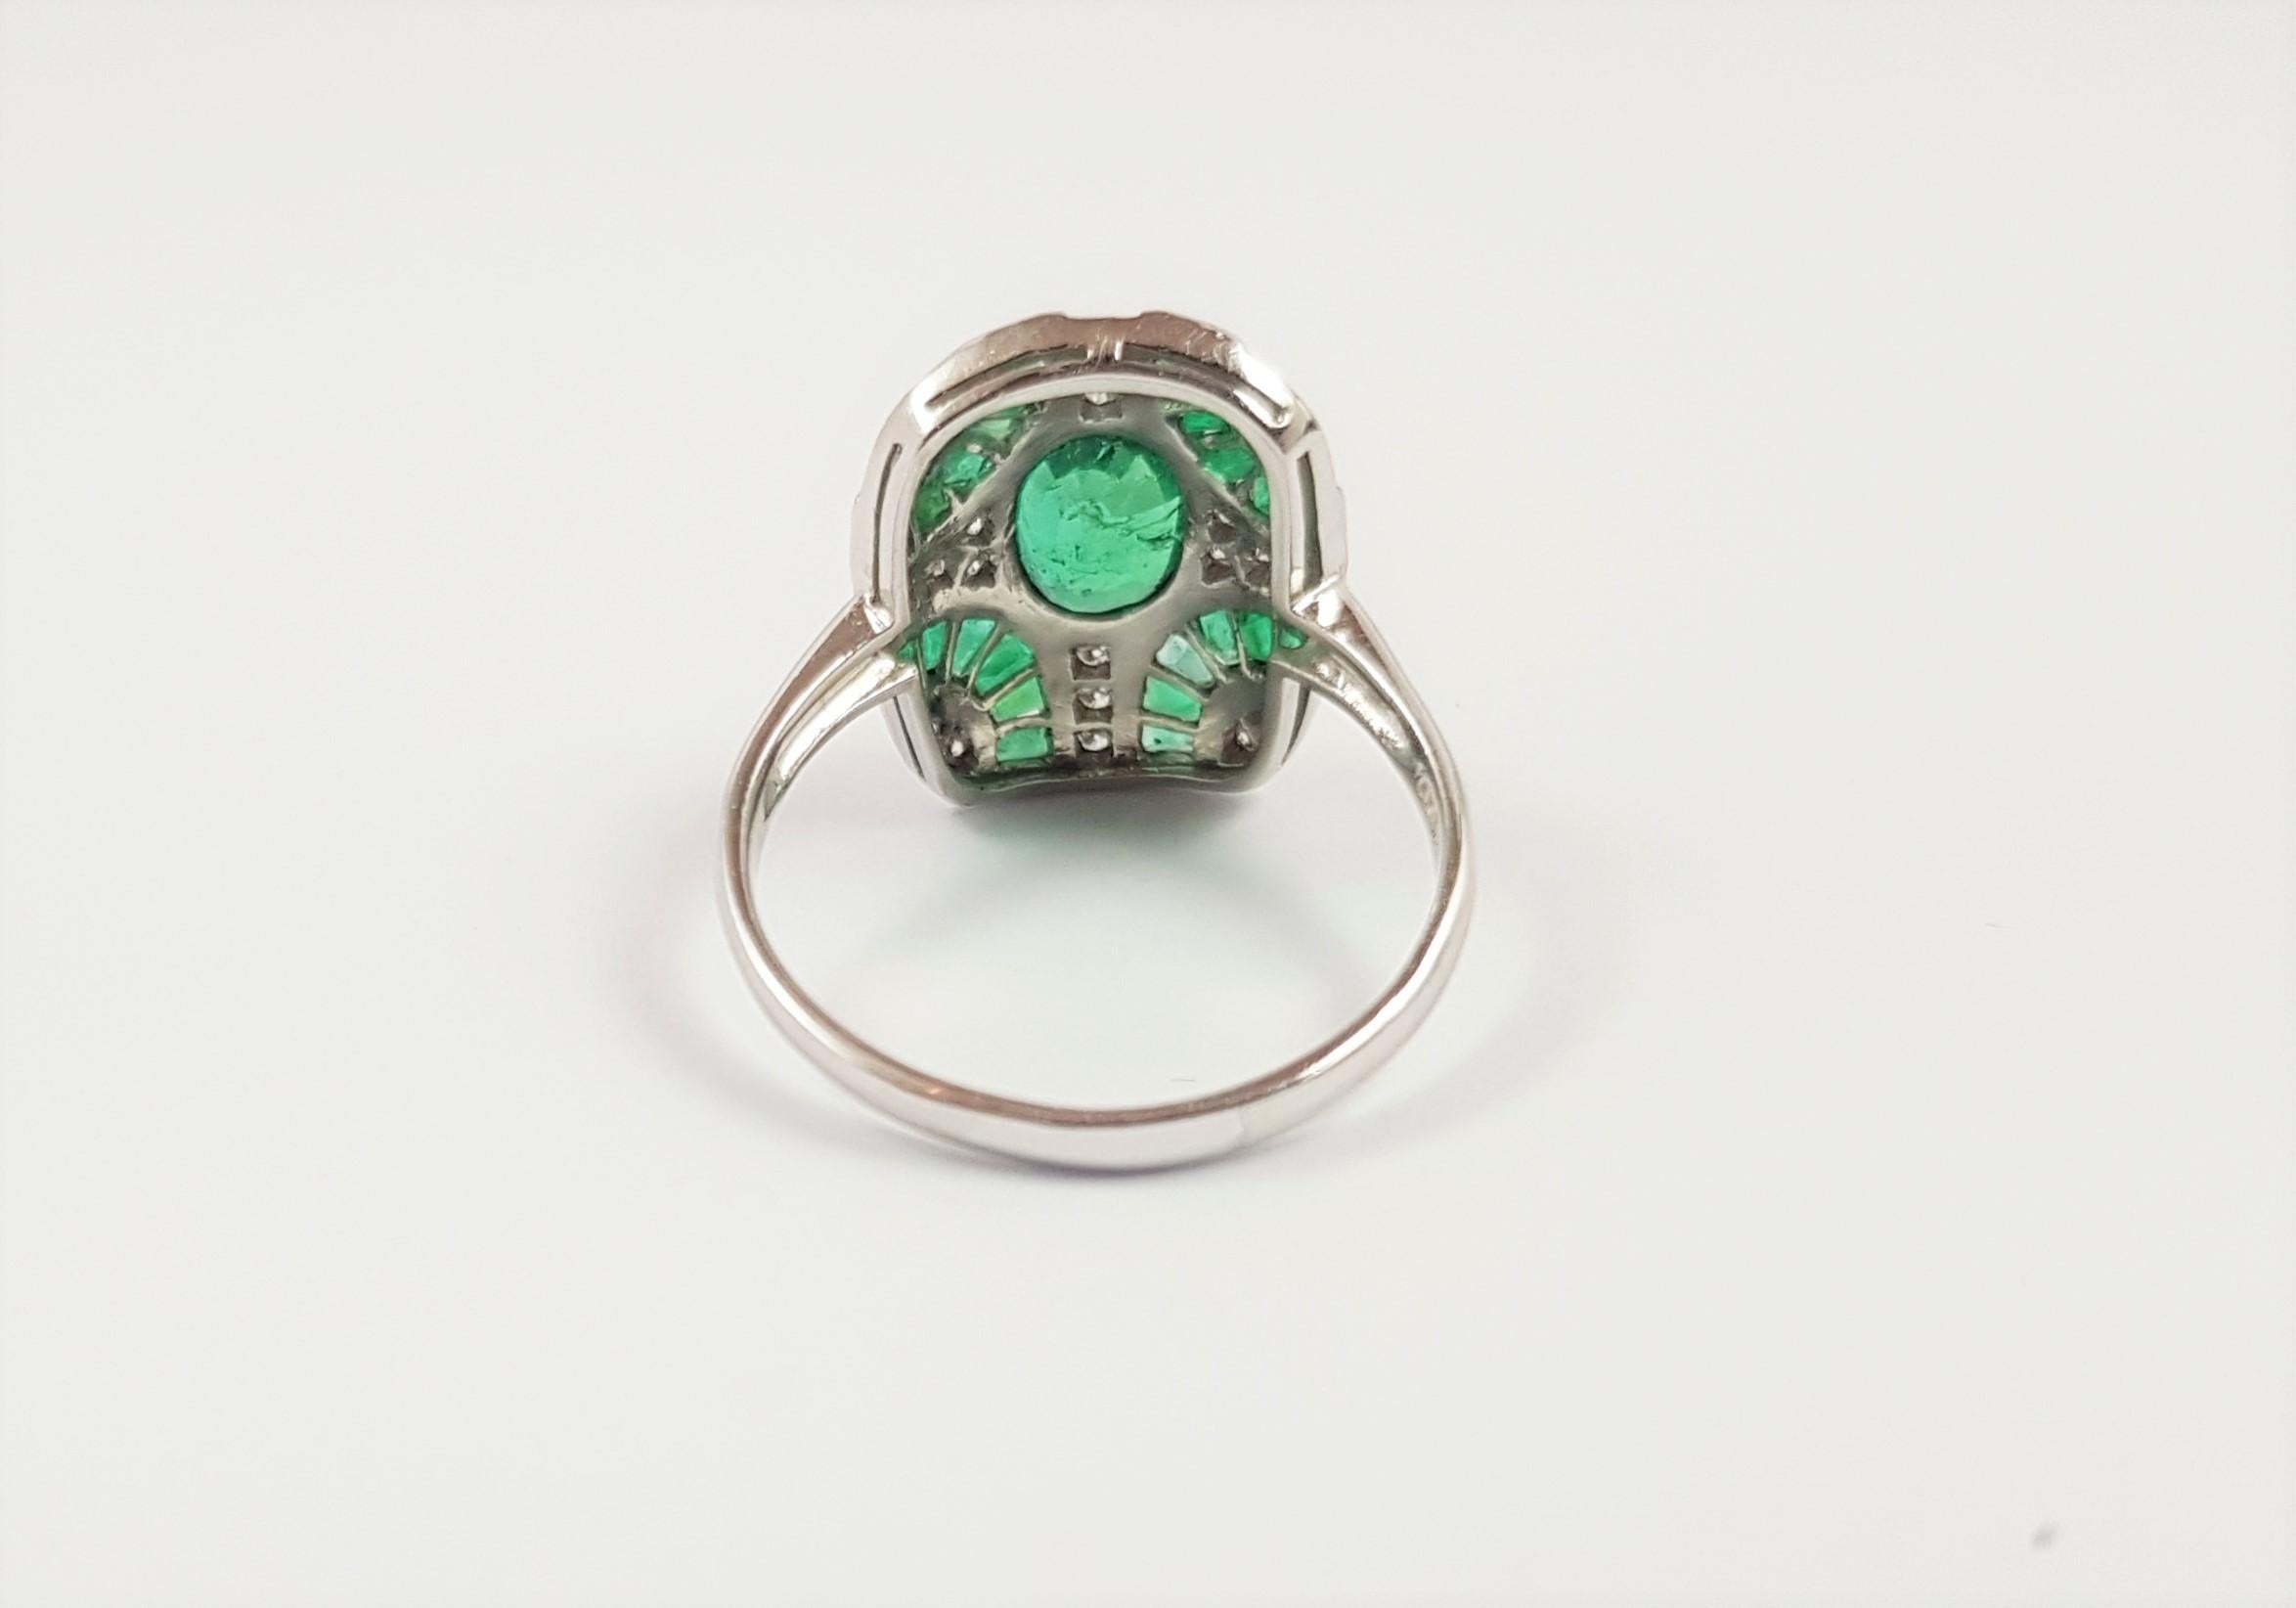 Emerald 0.80 carat with Emerald 0.92 carat and Diamond 0.13 carat Ring set in 18 Karat White Gold Settings

Width: 1.1 cm
Length: 1.6 cm 
Ring Size: 51

